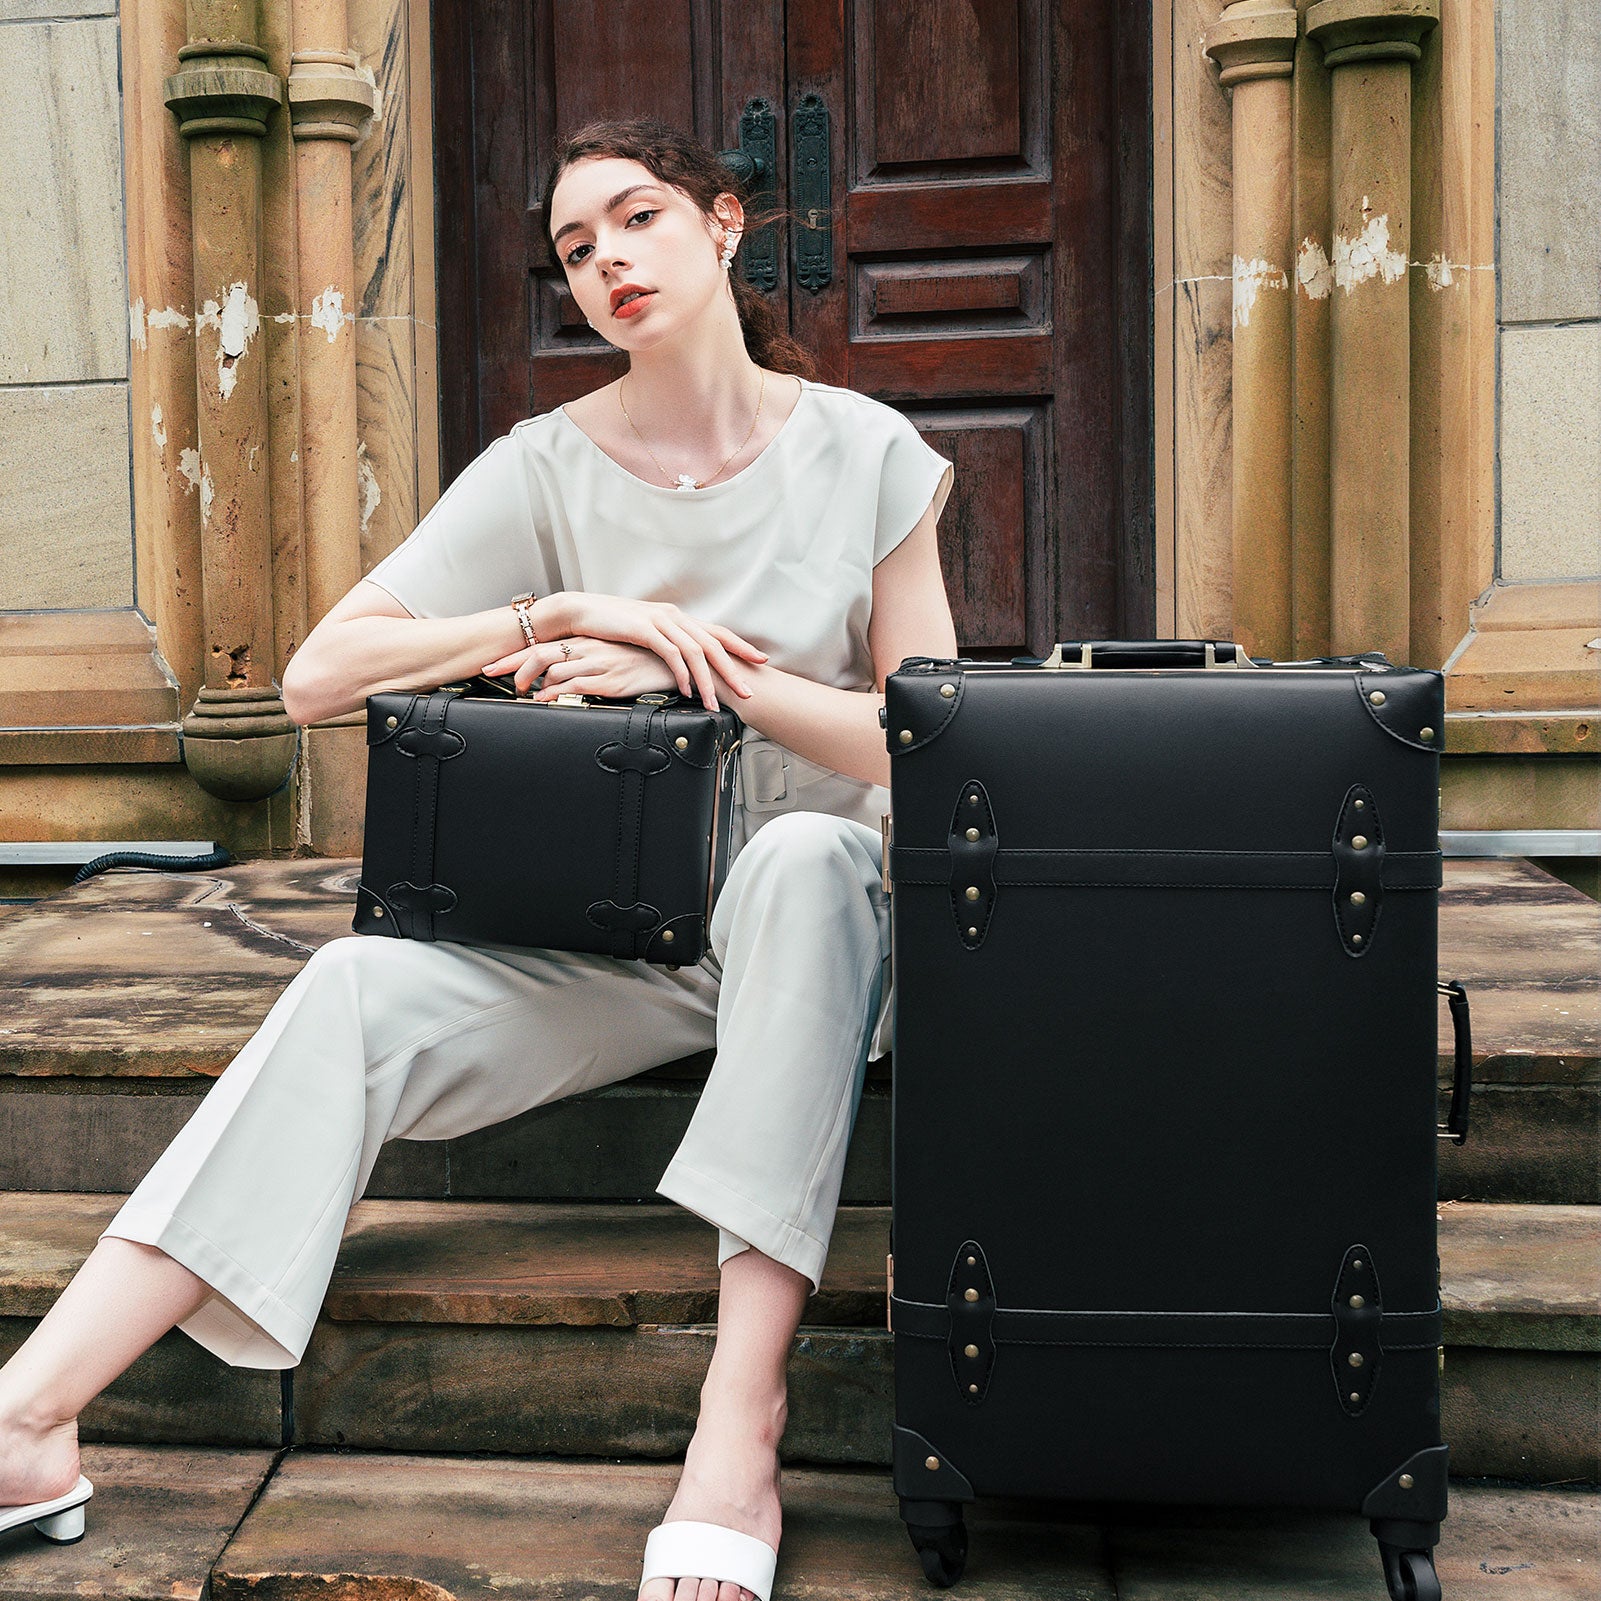 urecity vintage suitcase set for women, vintage luggage sets for women –  urecity-luggage